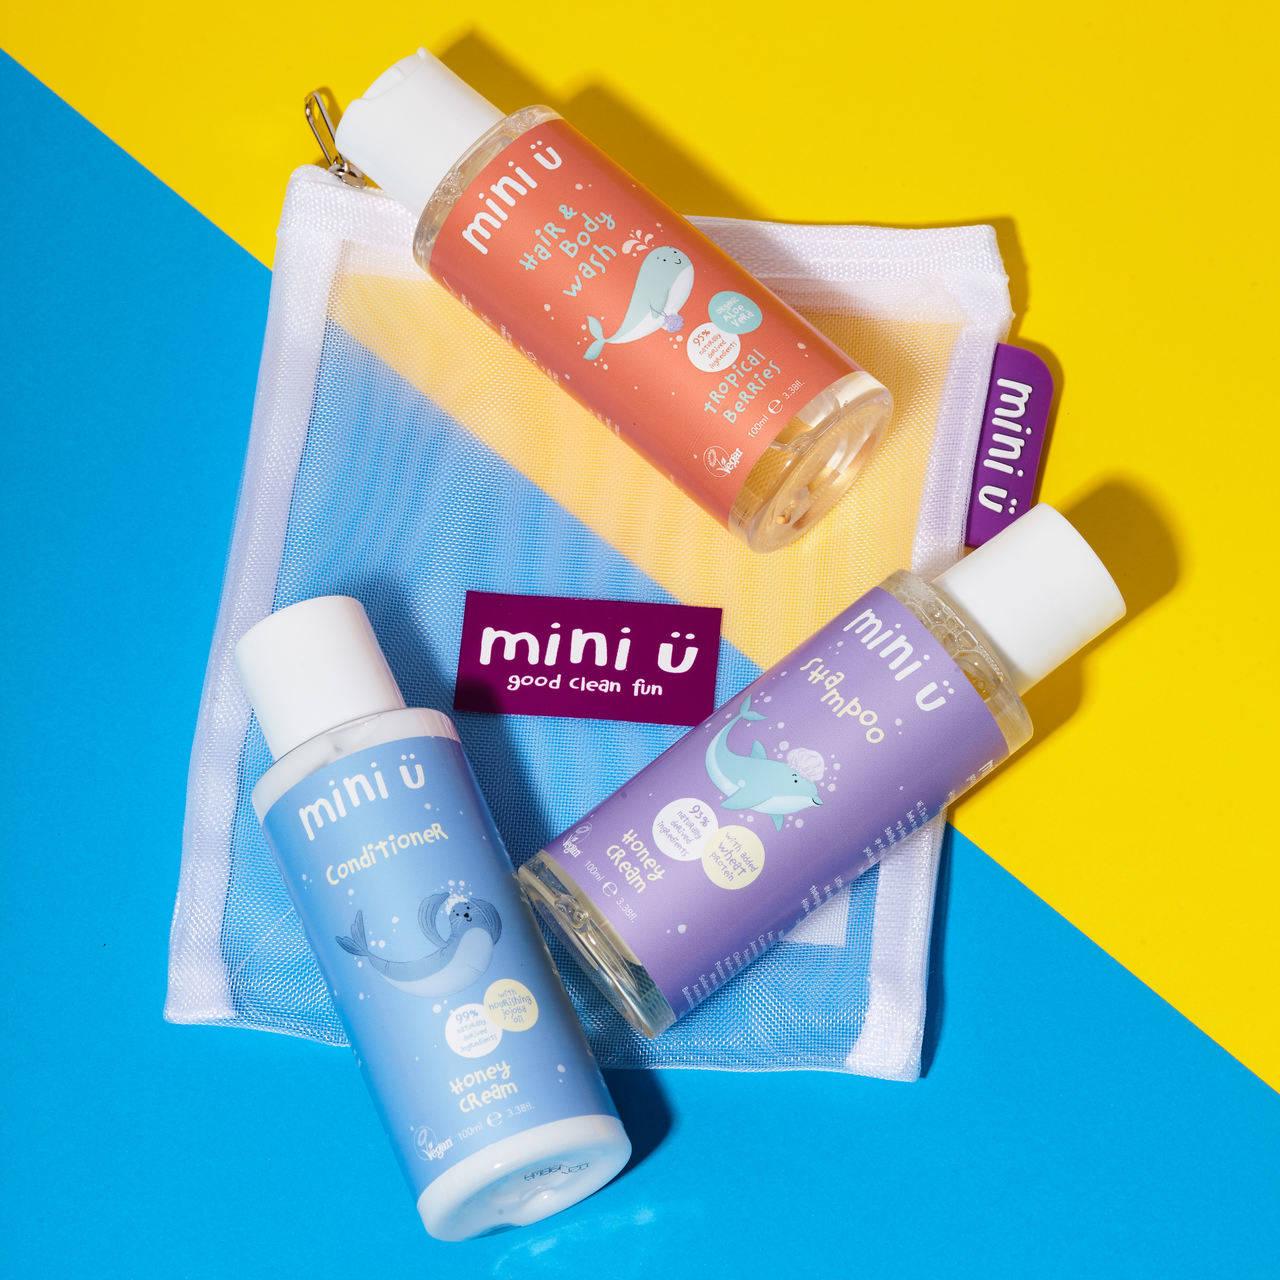 Mini-U: Travel Size cosmetics set